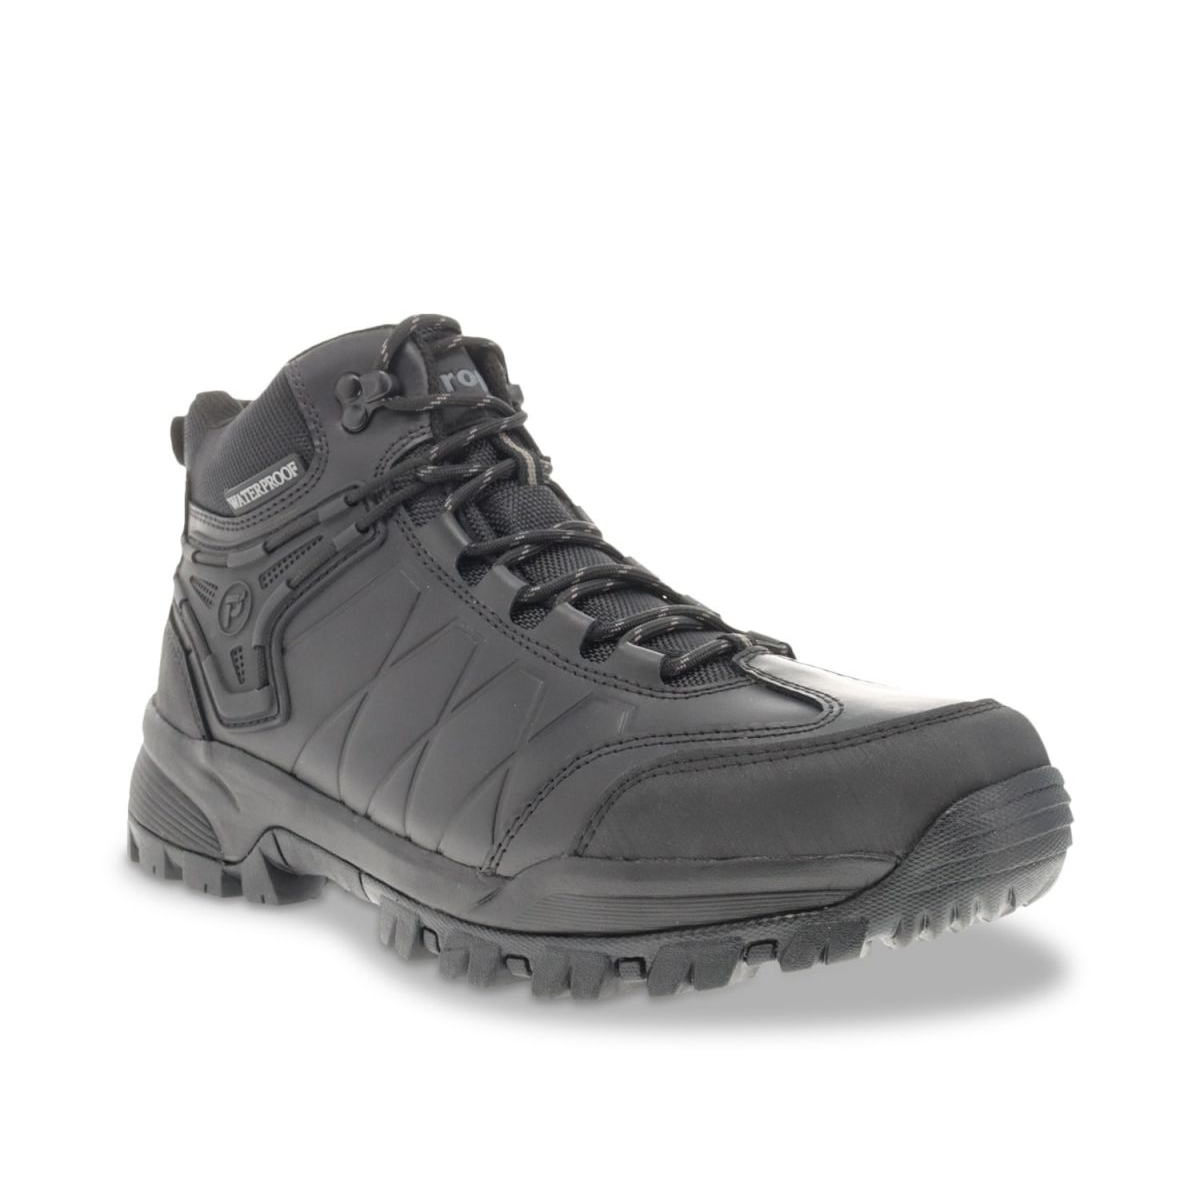 Propet Men's Ridge Walker Force Hiking Boots Black - MBA052LBLK BLACK - BLACK, 10.5 X-Wide